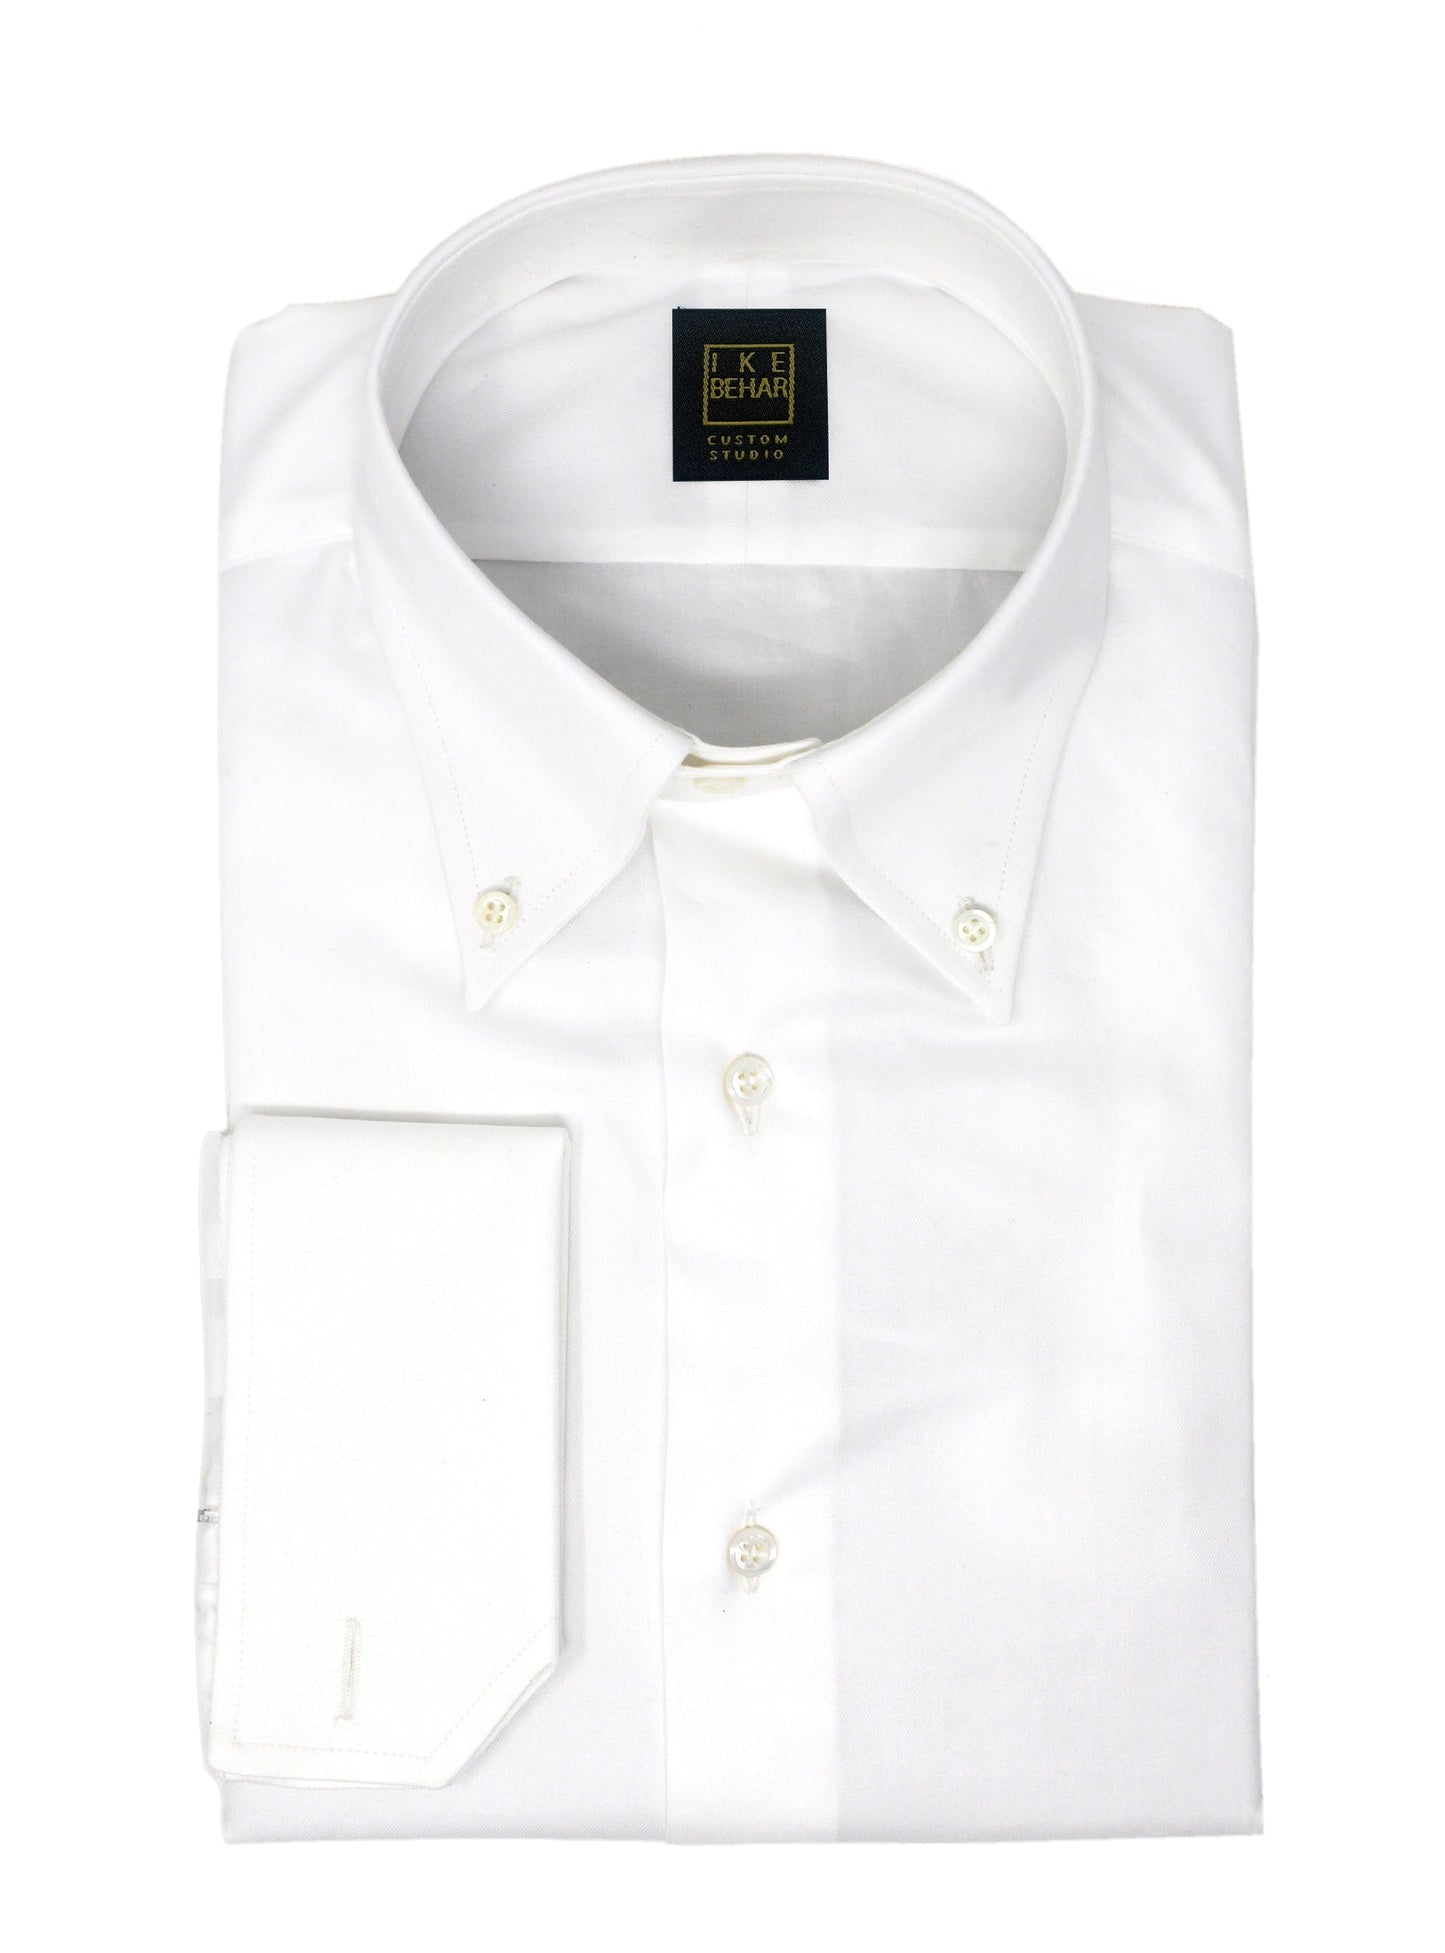 White On White Stripe Made-to-Measure Dress Shirt